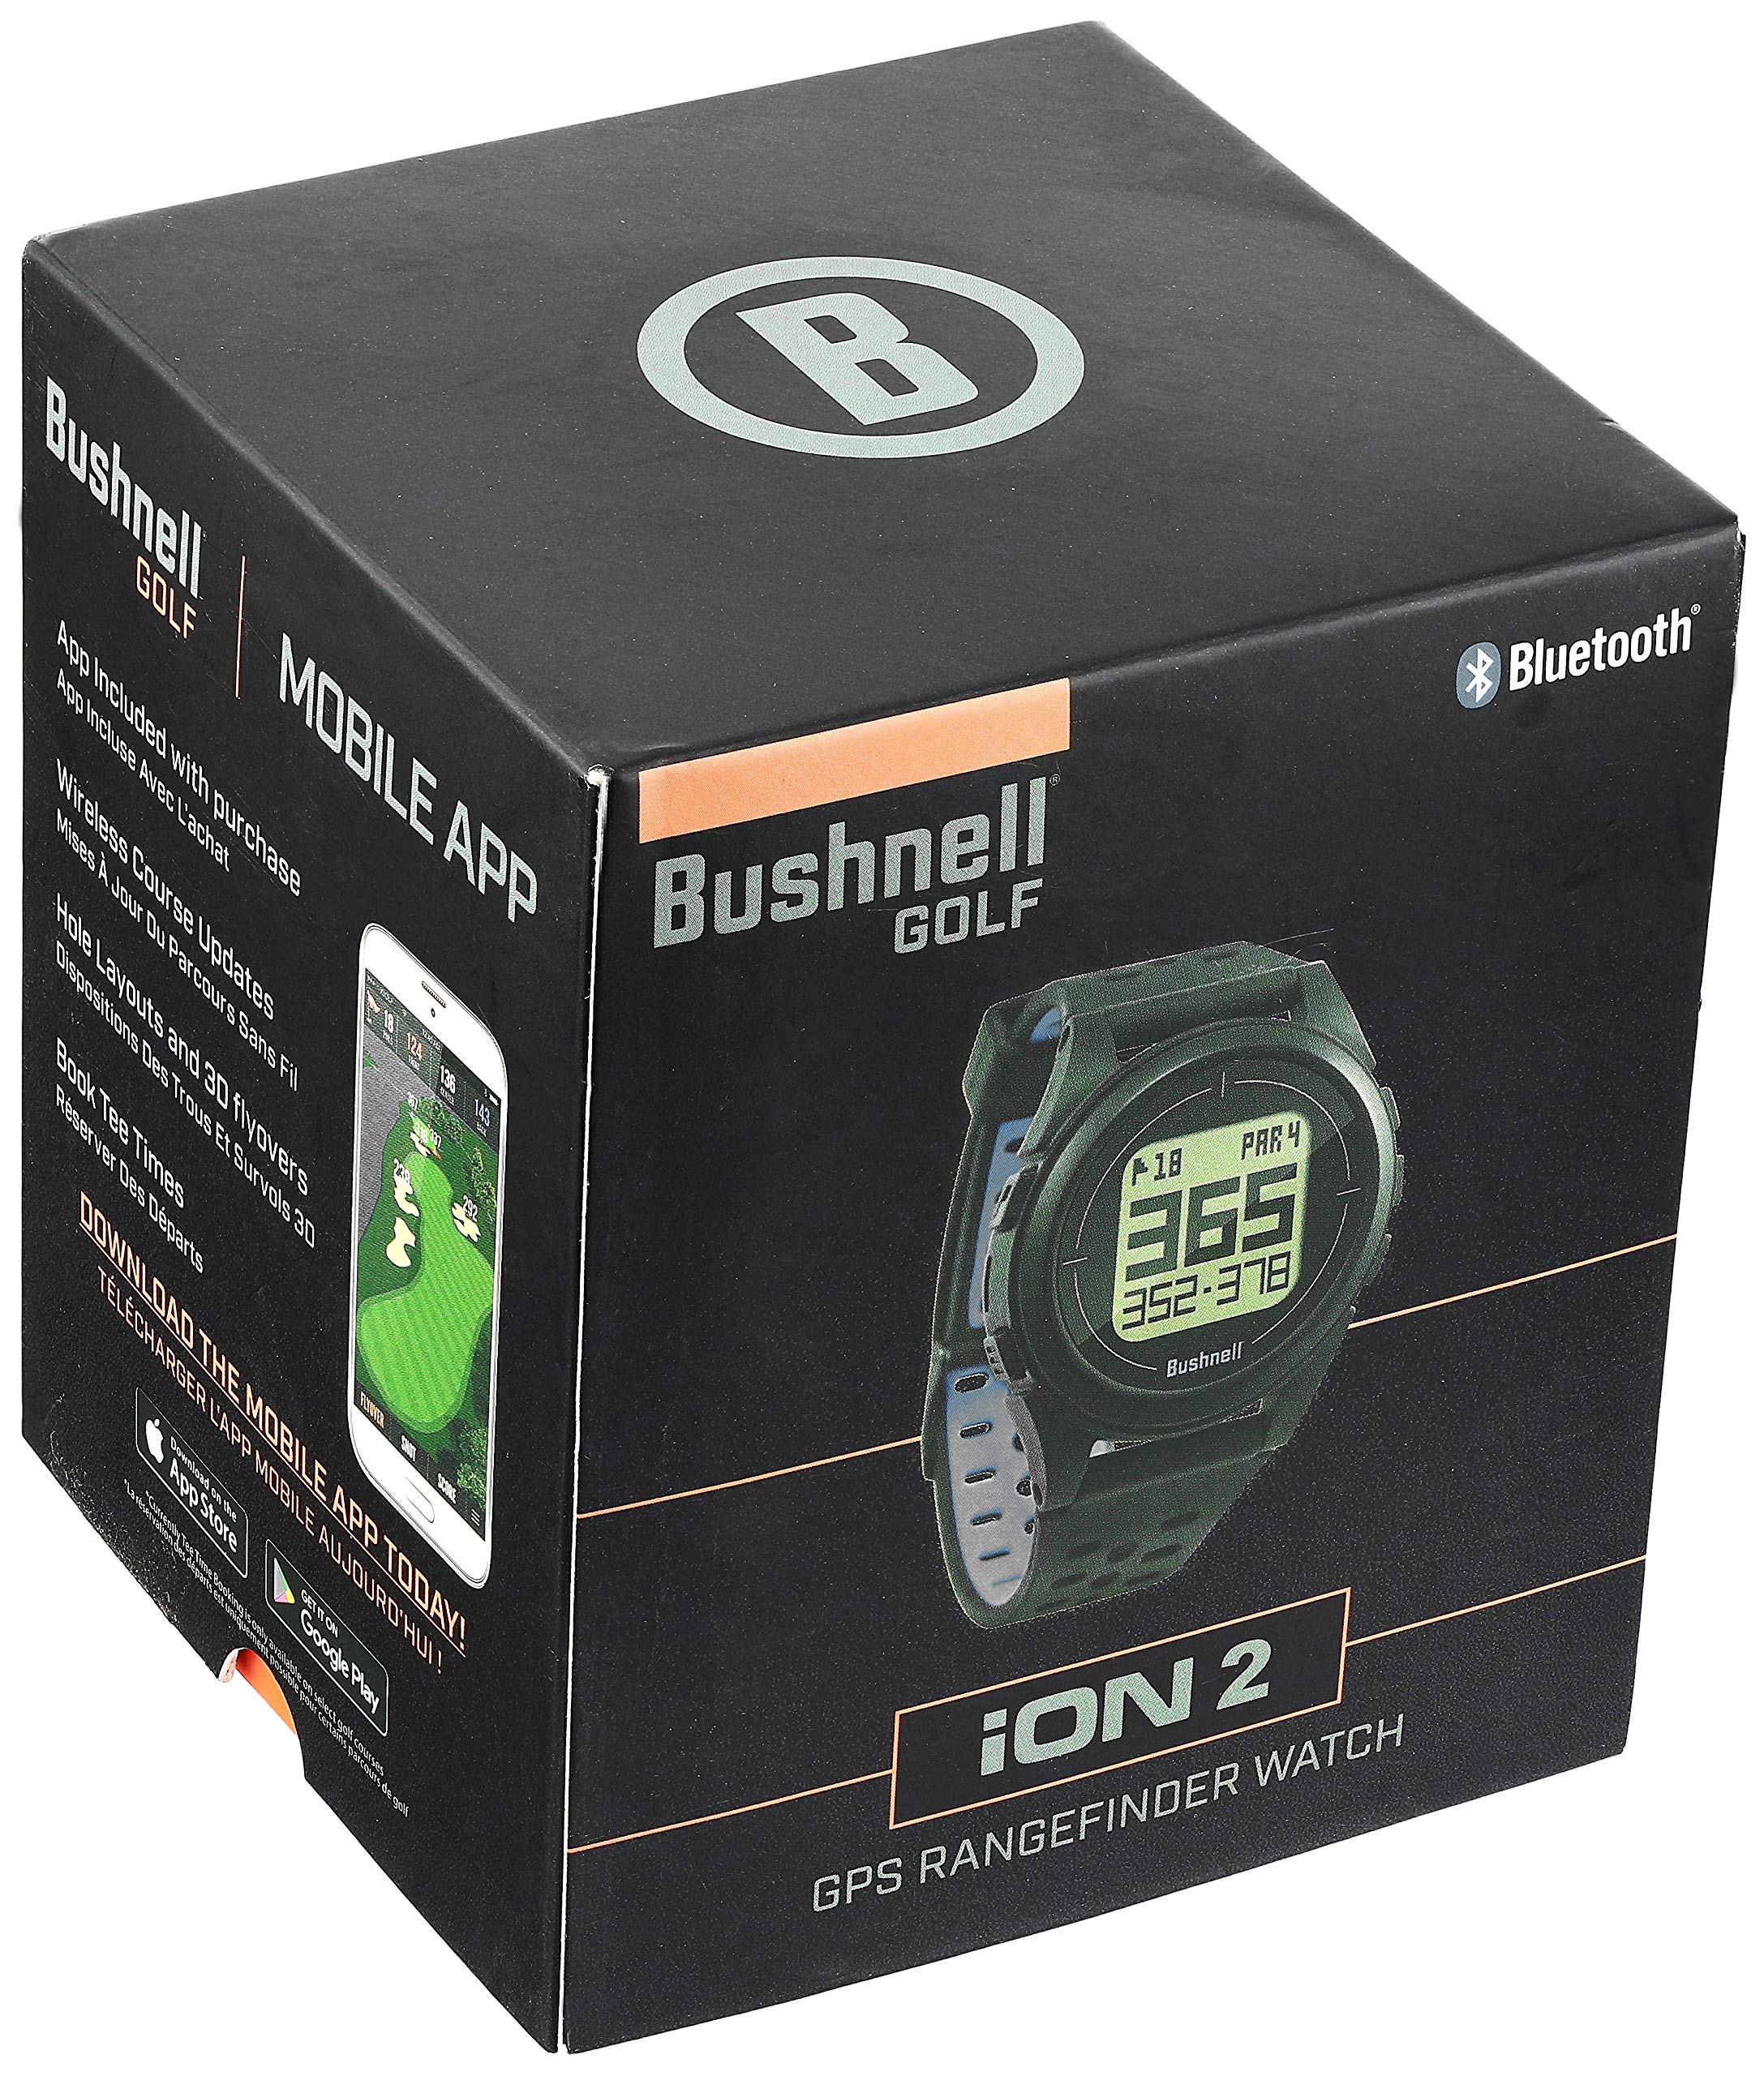 Bushnell 368850 Neo Ion 2 Golf GPS Watch, Large, Black/Blue